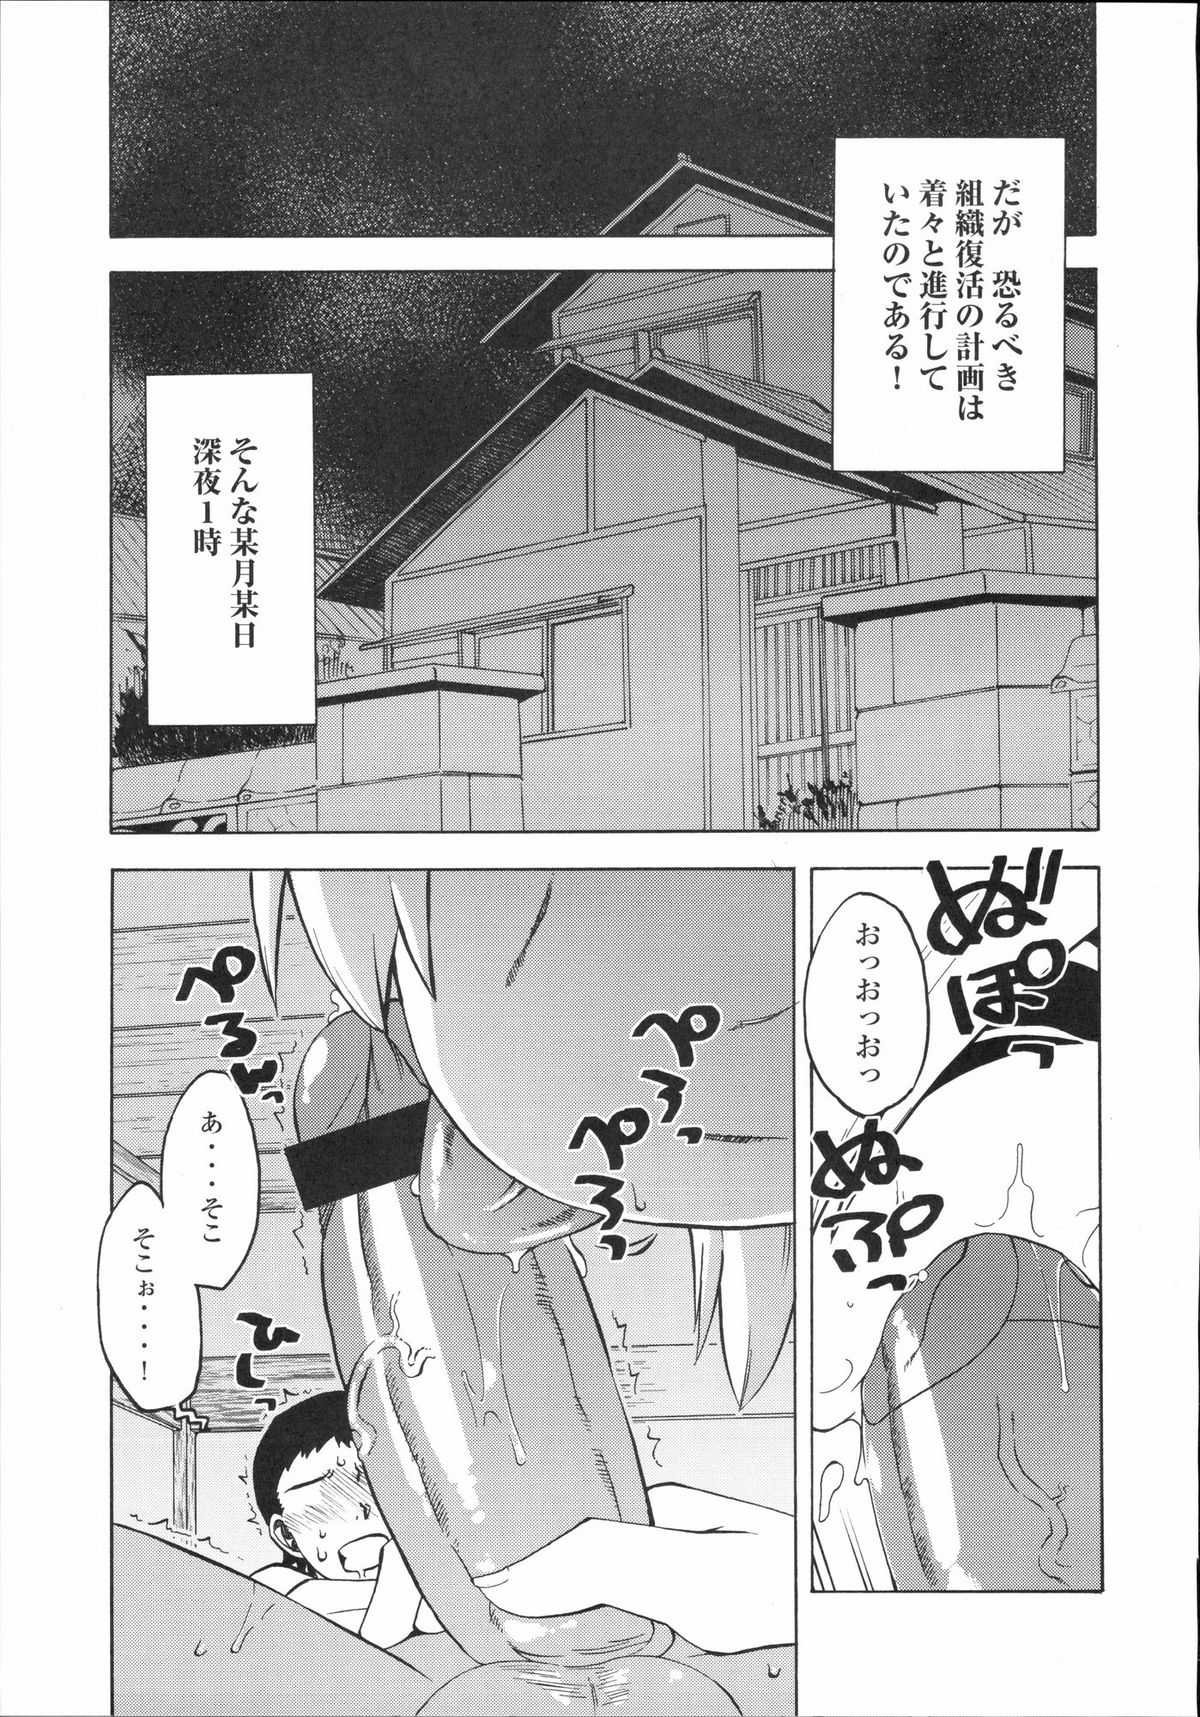 [Toranoana] Shinzui Vol. 2 [株式会社虎の穴] 真髄 Vol.2